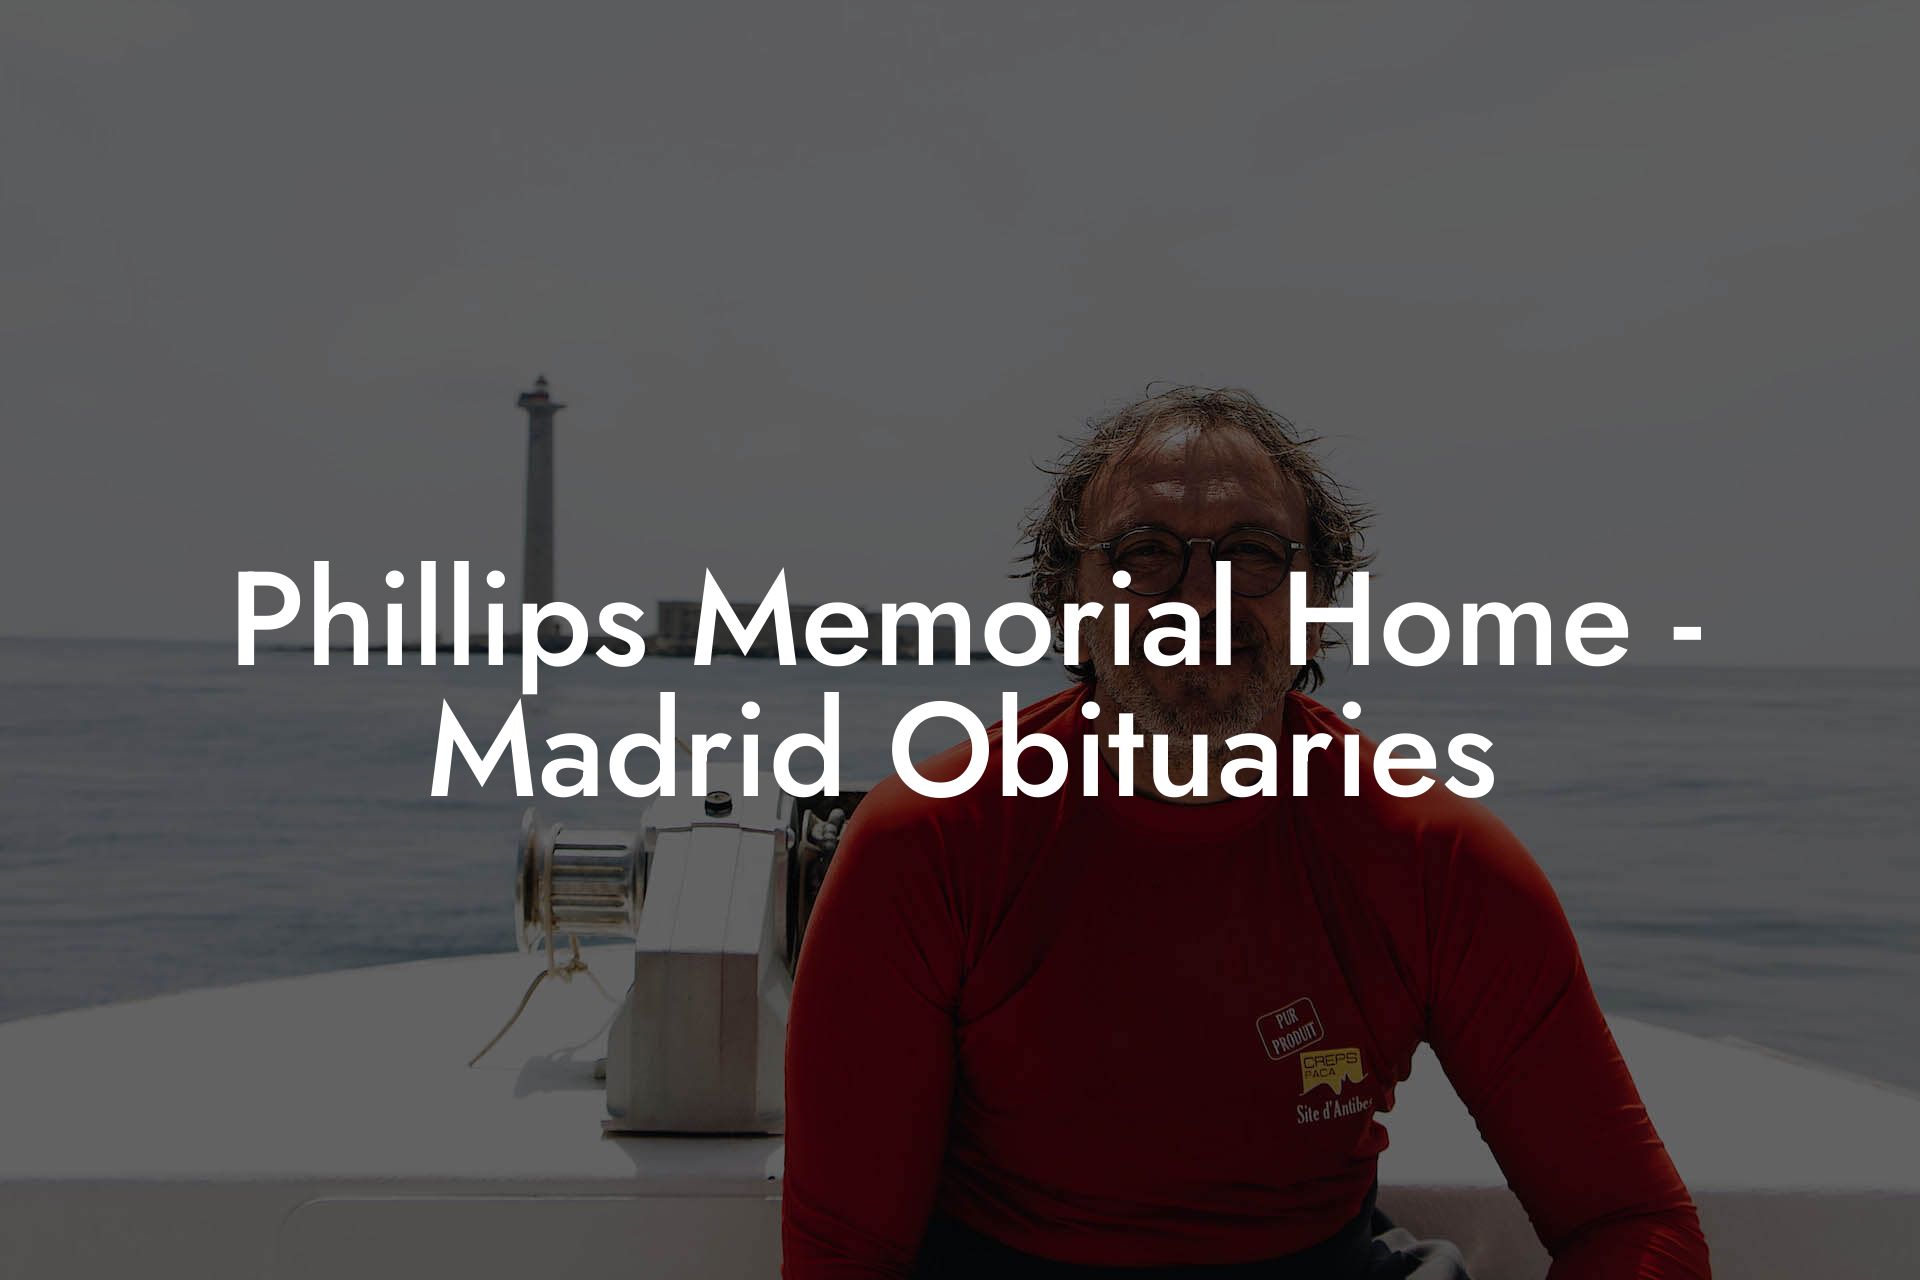 Phillips Memorial Home - Madrid Obituaries